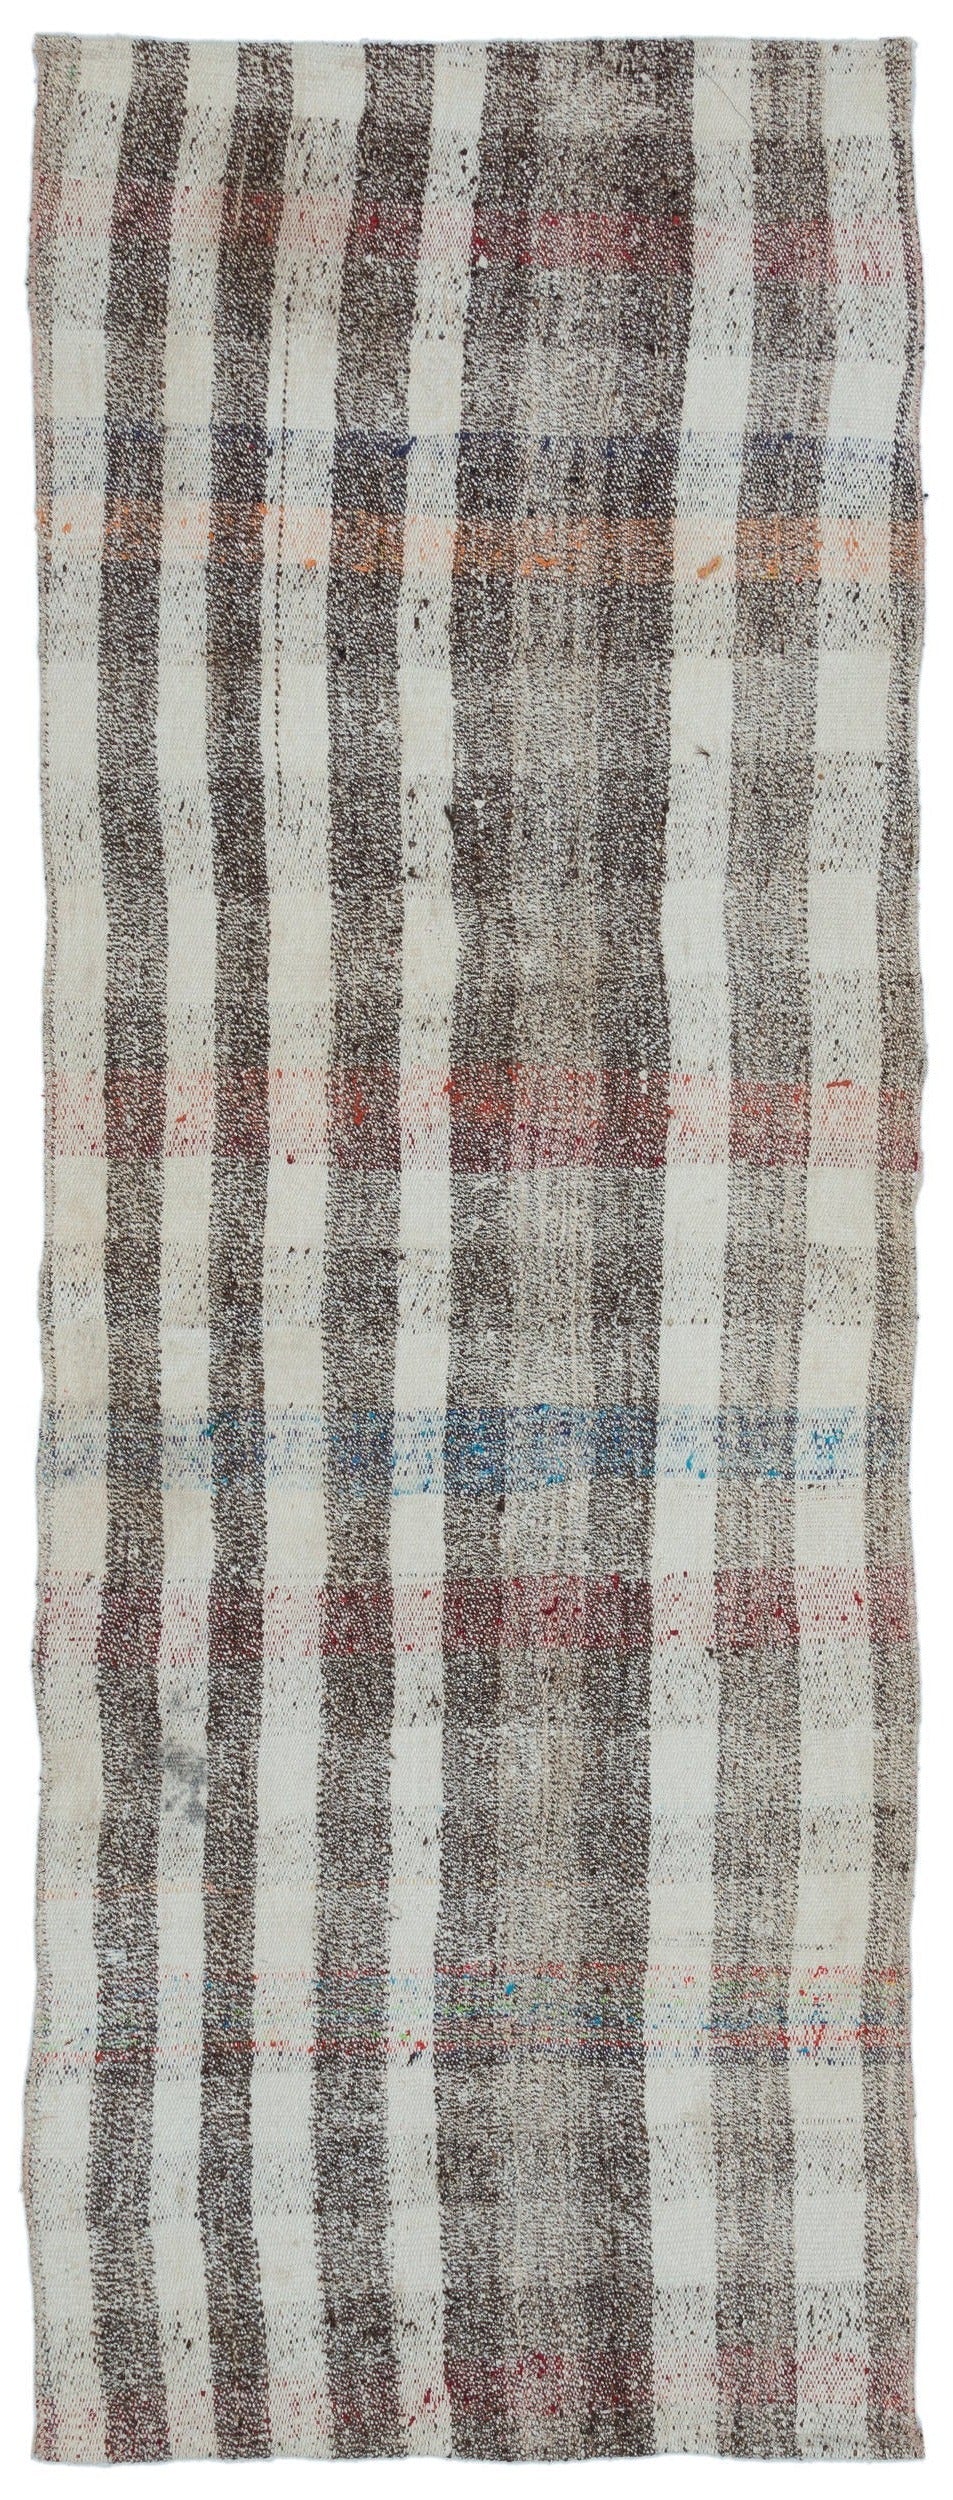 Crete 32494 Beige Striped Wool Hand Woven Carpet 085 x 230